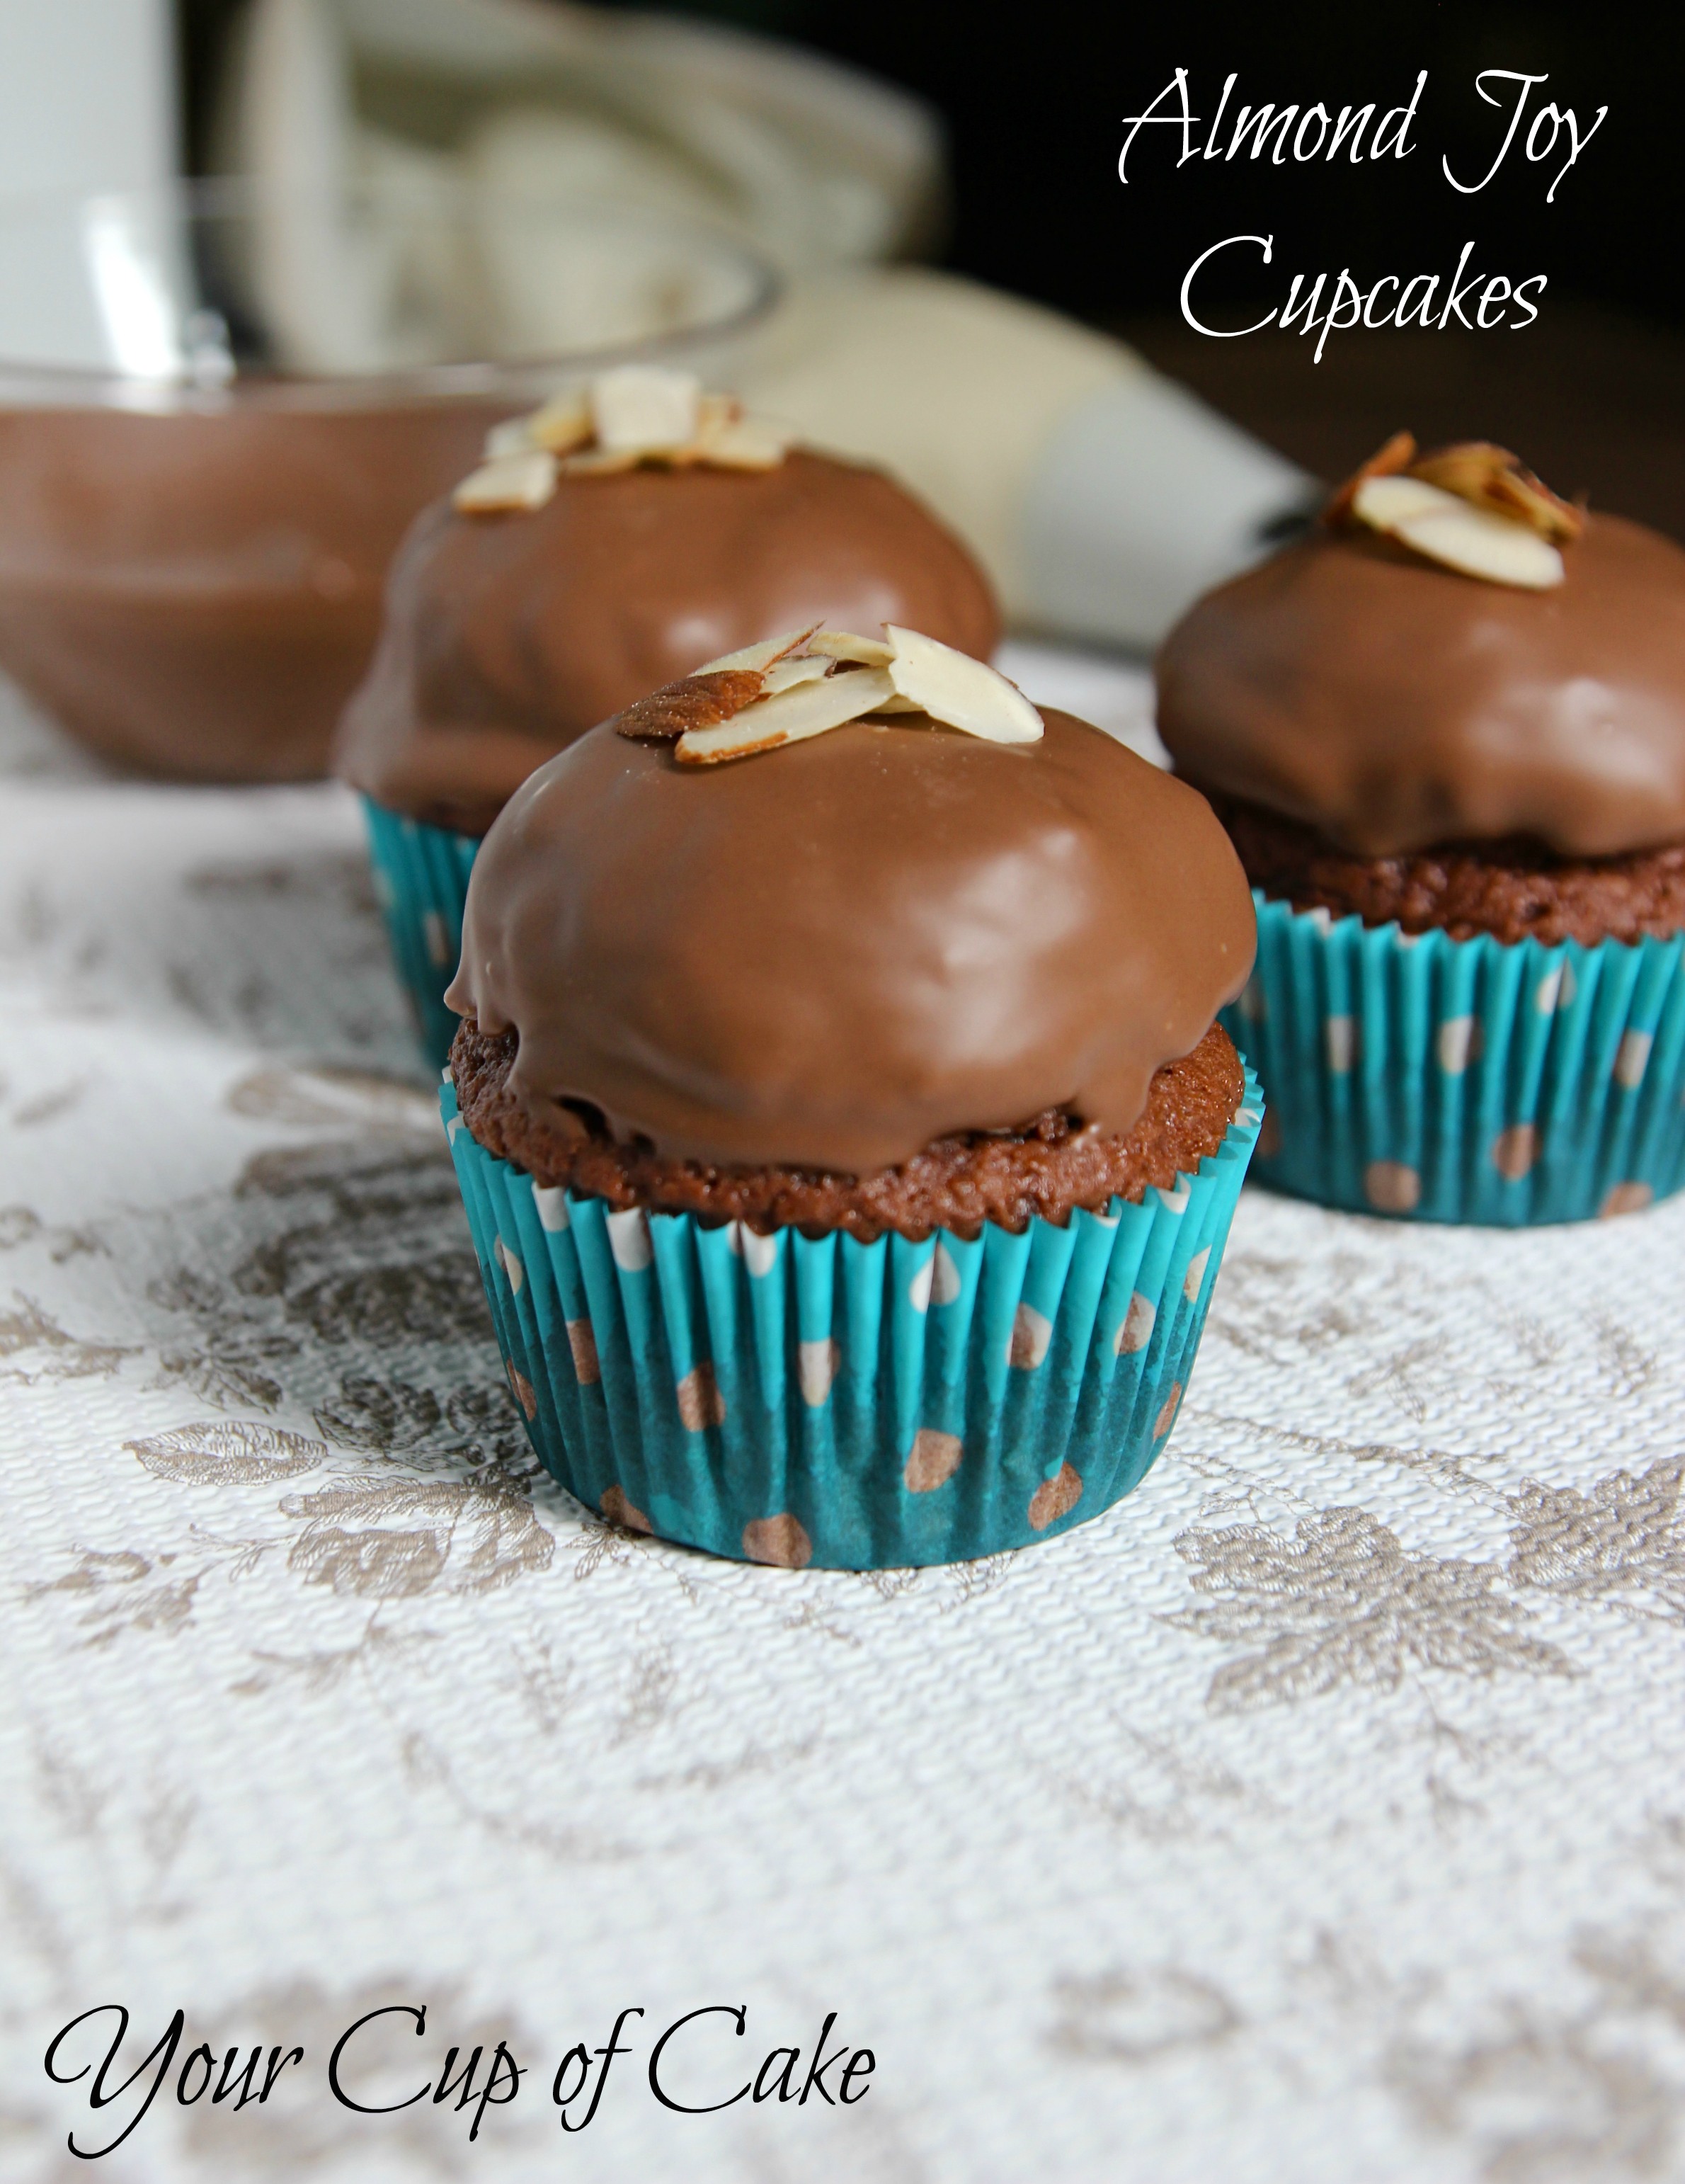 https://www.yourcupofcake.com/wp-content/uploads/2012/06/Almond-Joy-Cupcakes.jpg